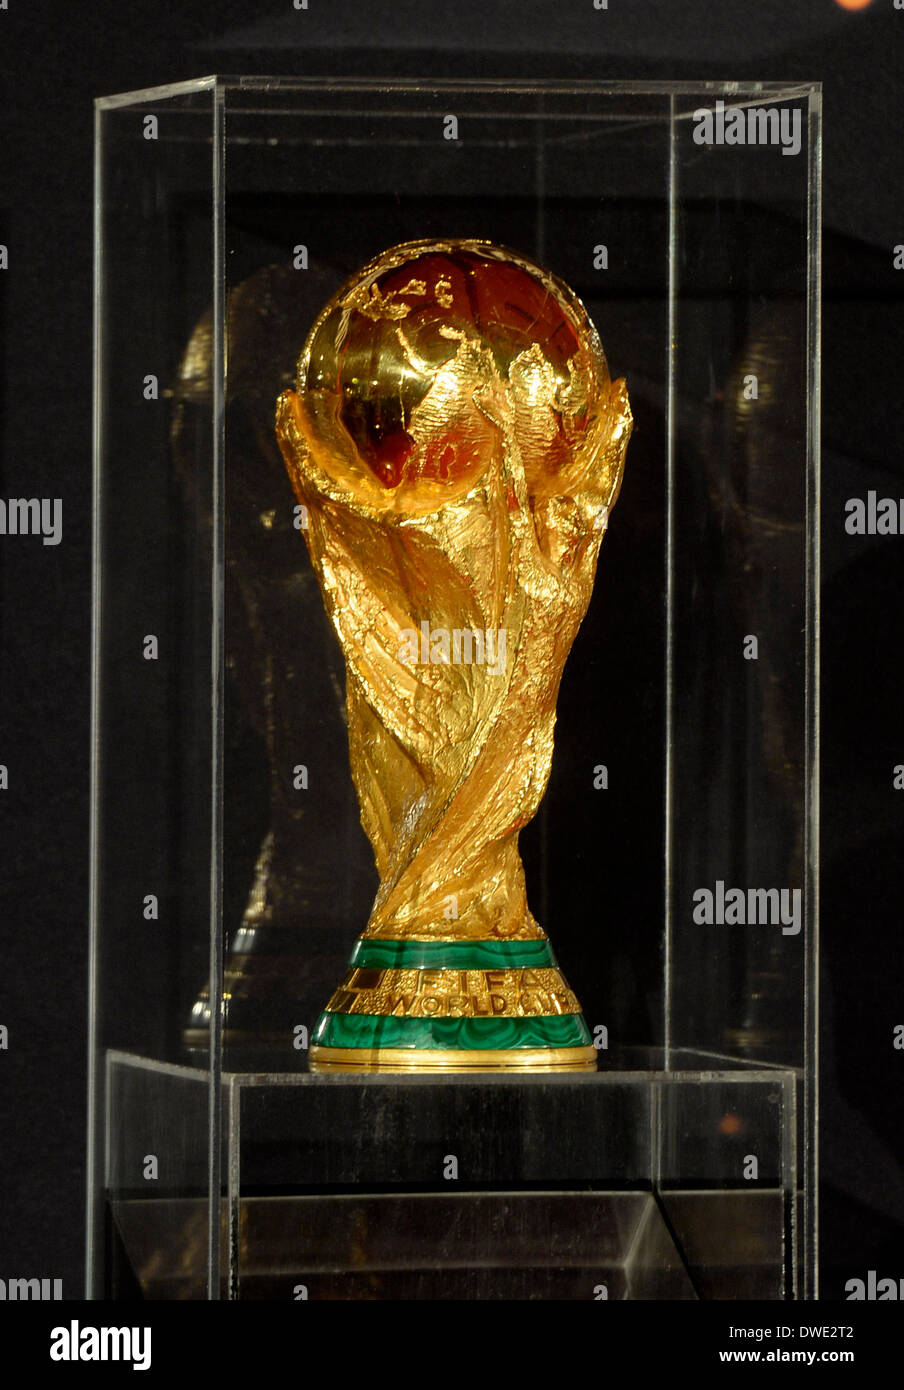 Coca-Cola: FIFA World Cup Trophy Tour – Octagon